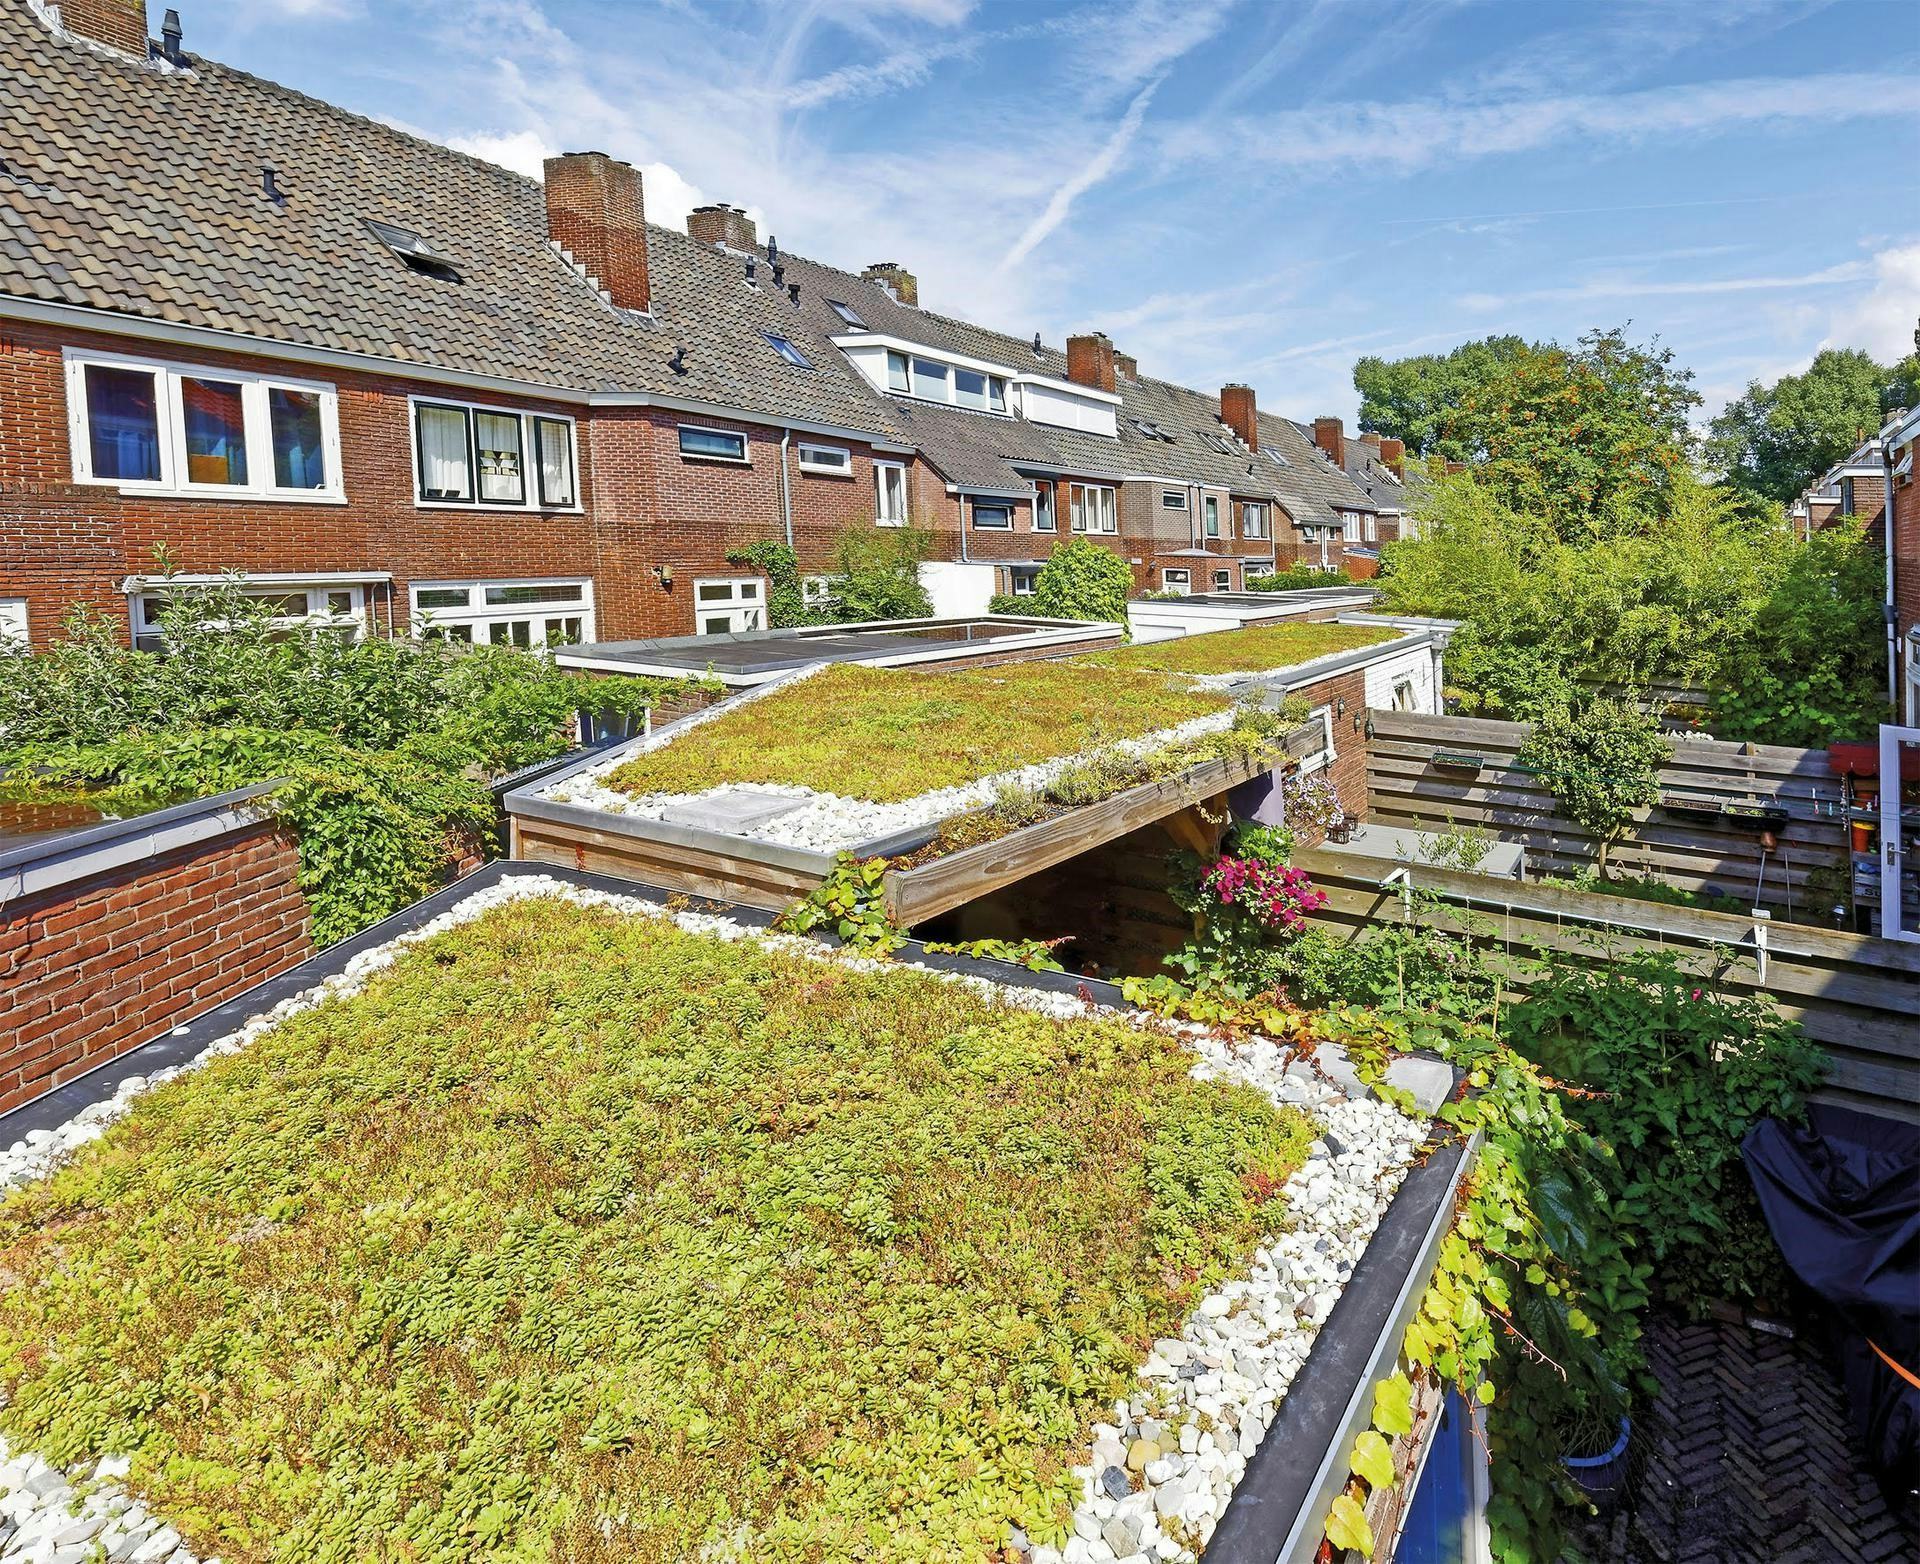 Interpolis wil met groene daken sterke stijging neerslagschades halt toe roepen